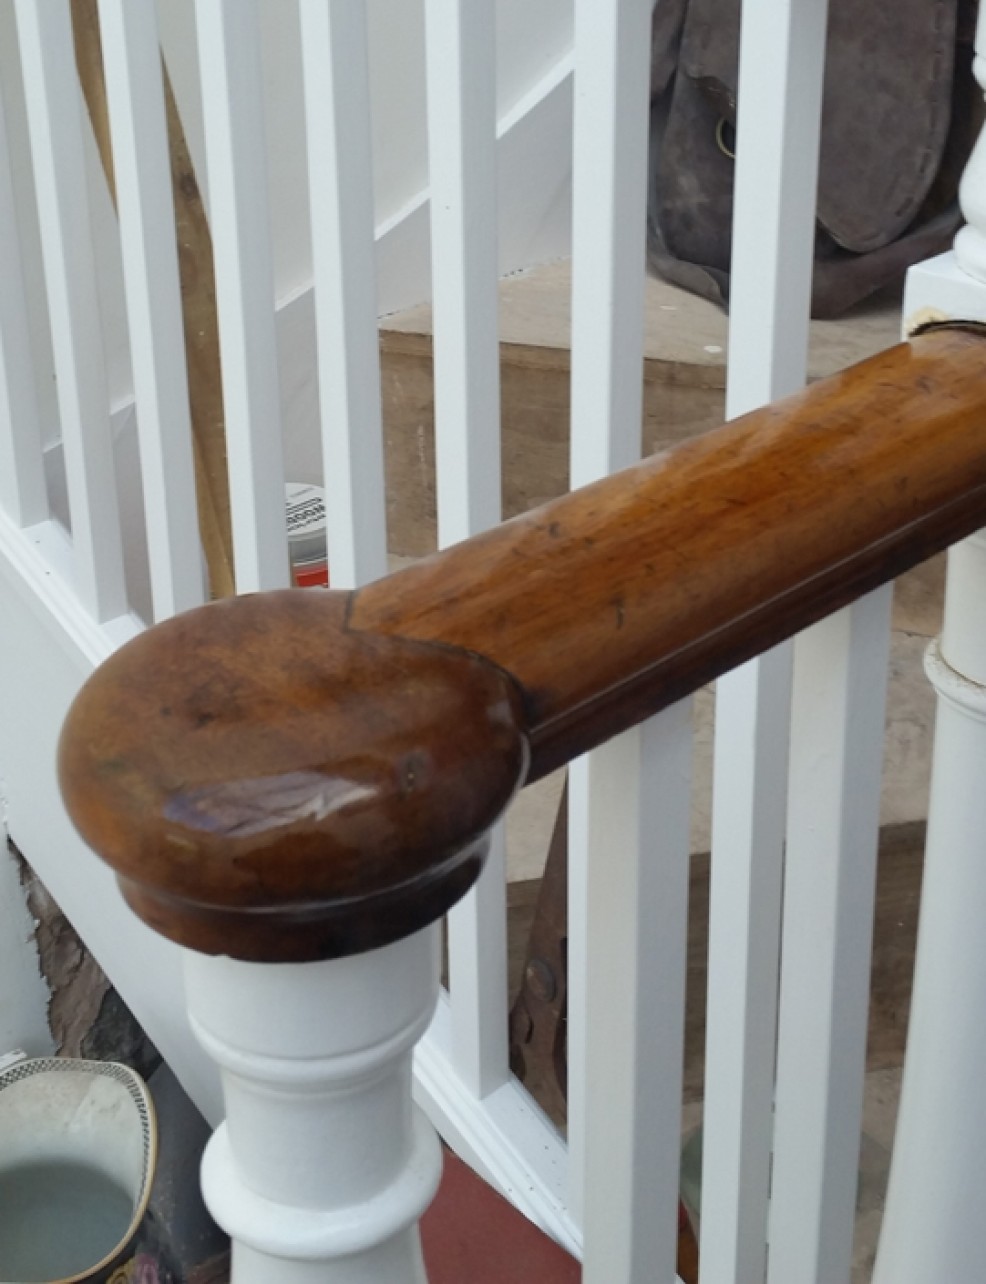 Restored handrail